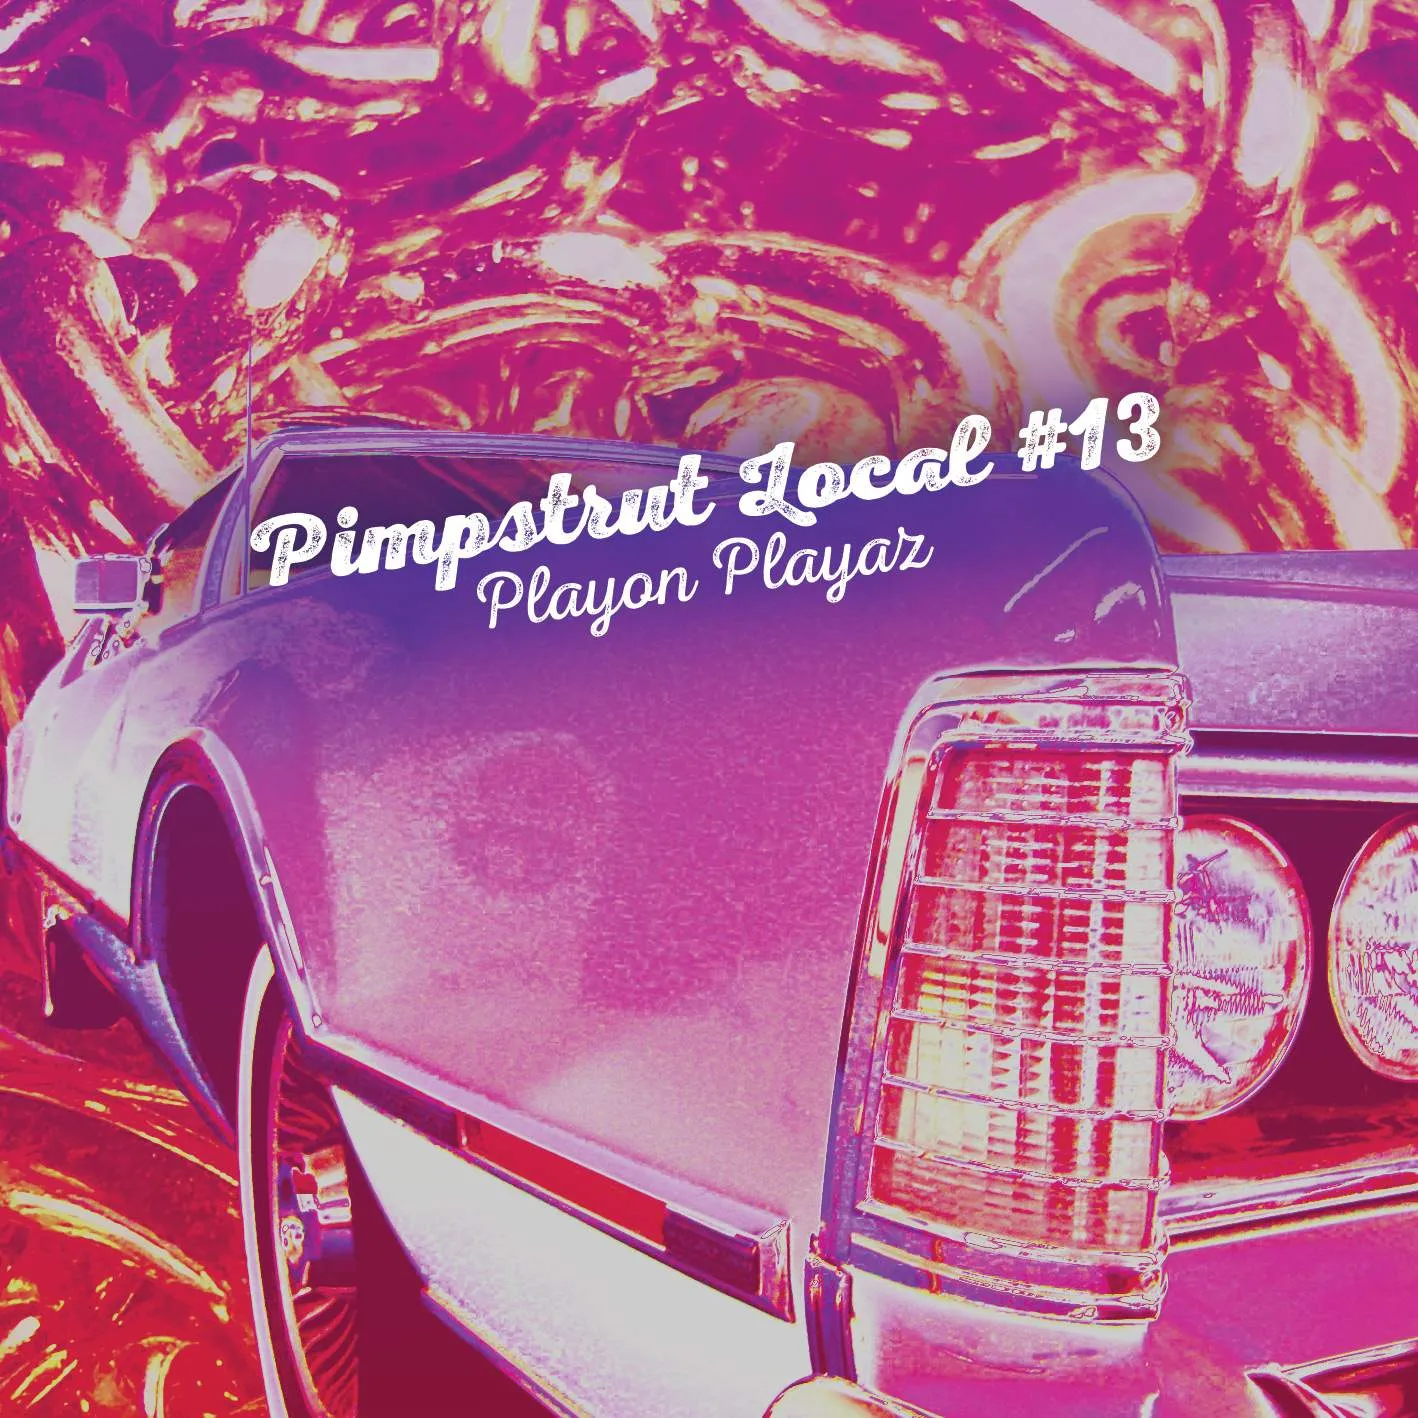 Album cover for “Playon Playaz” by Pimpstrut Local #13